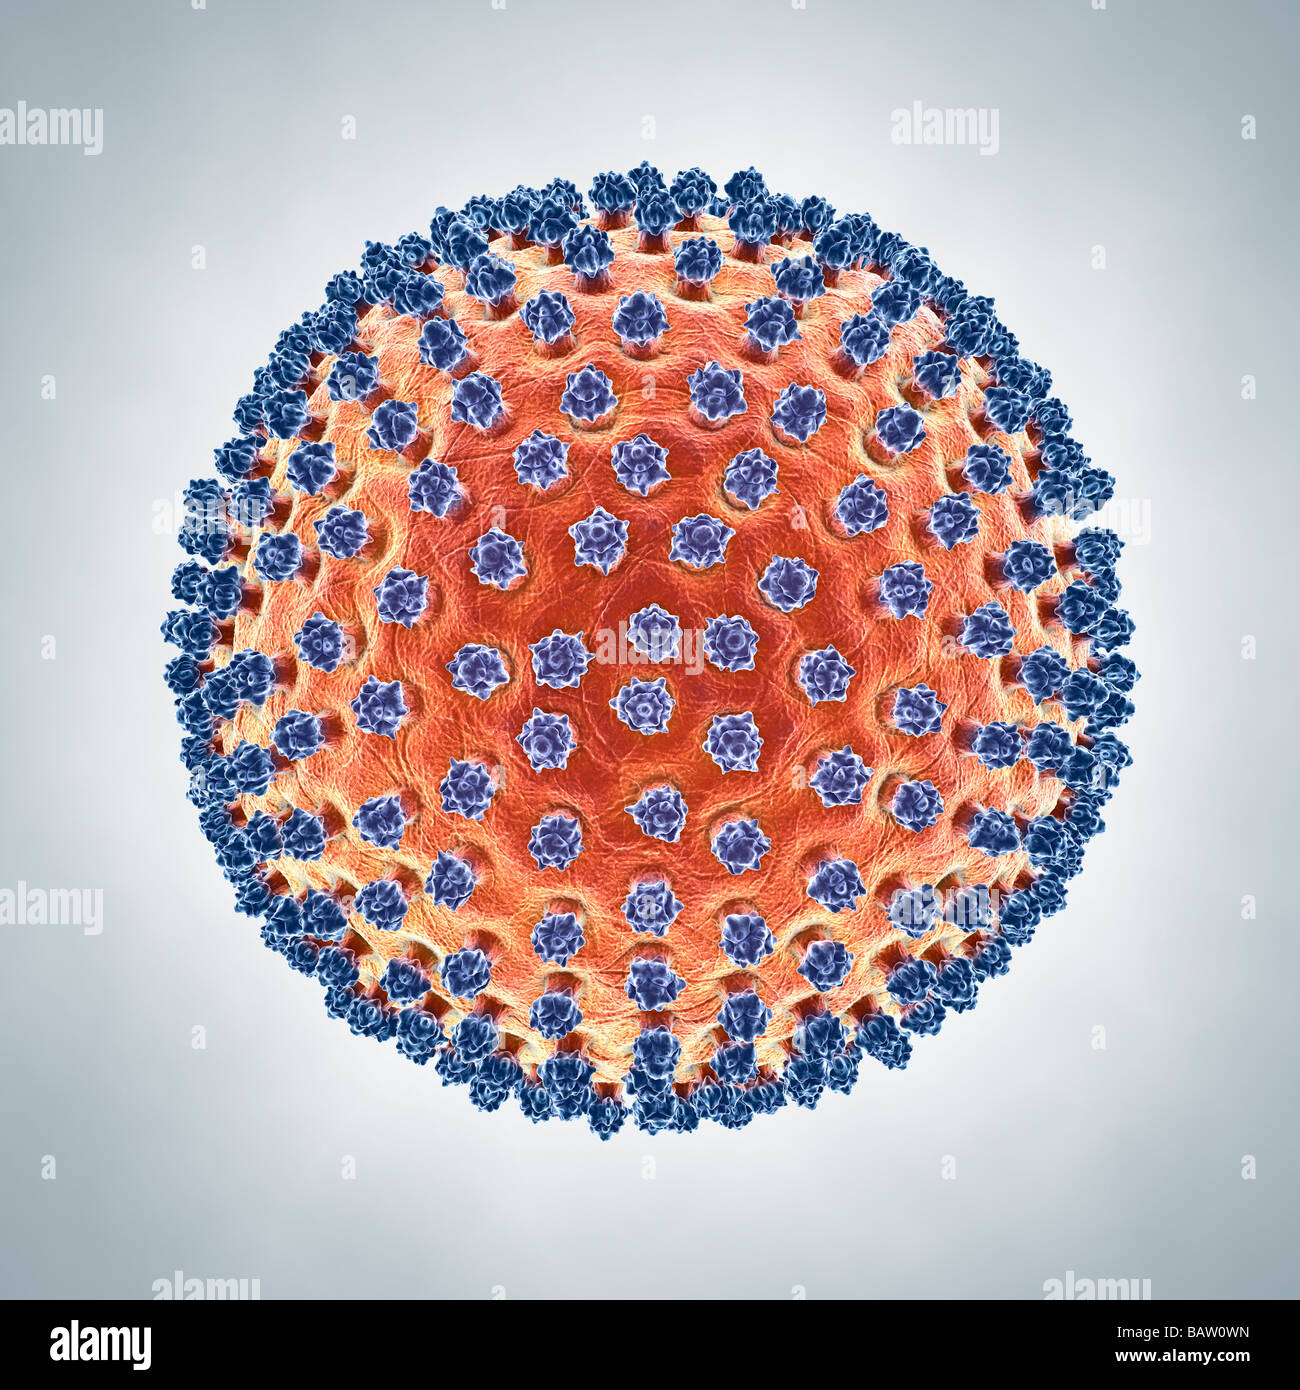 Ilustración de un virus A H1N1 símbolo de infección enfermedad epidemia pandemia pandemia Foto de stock